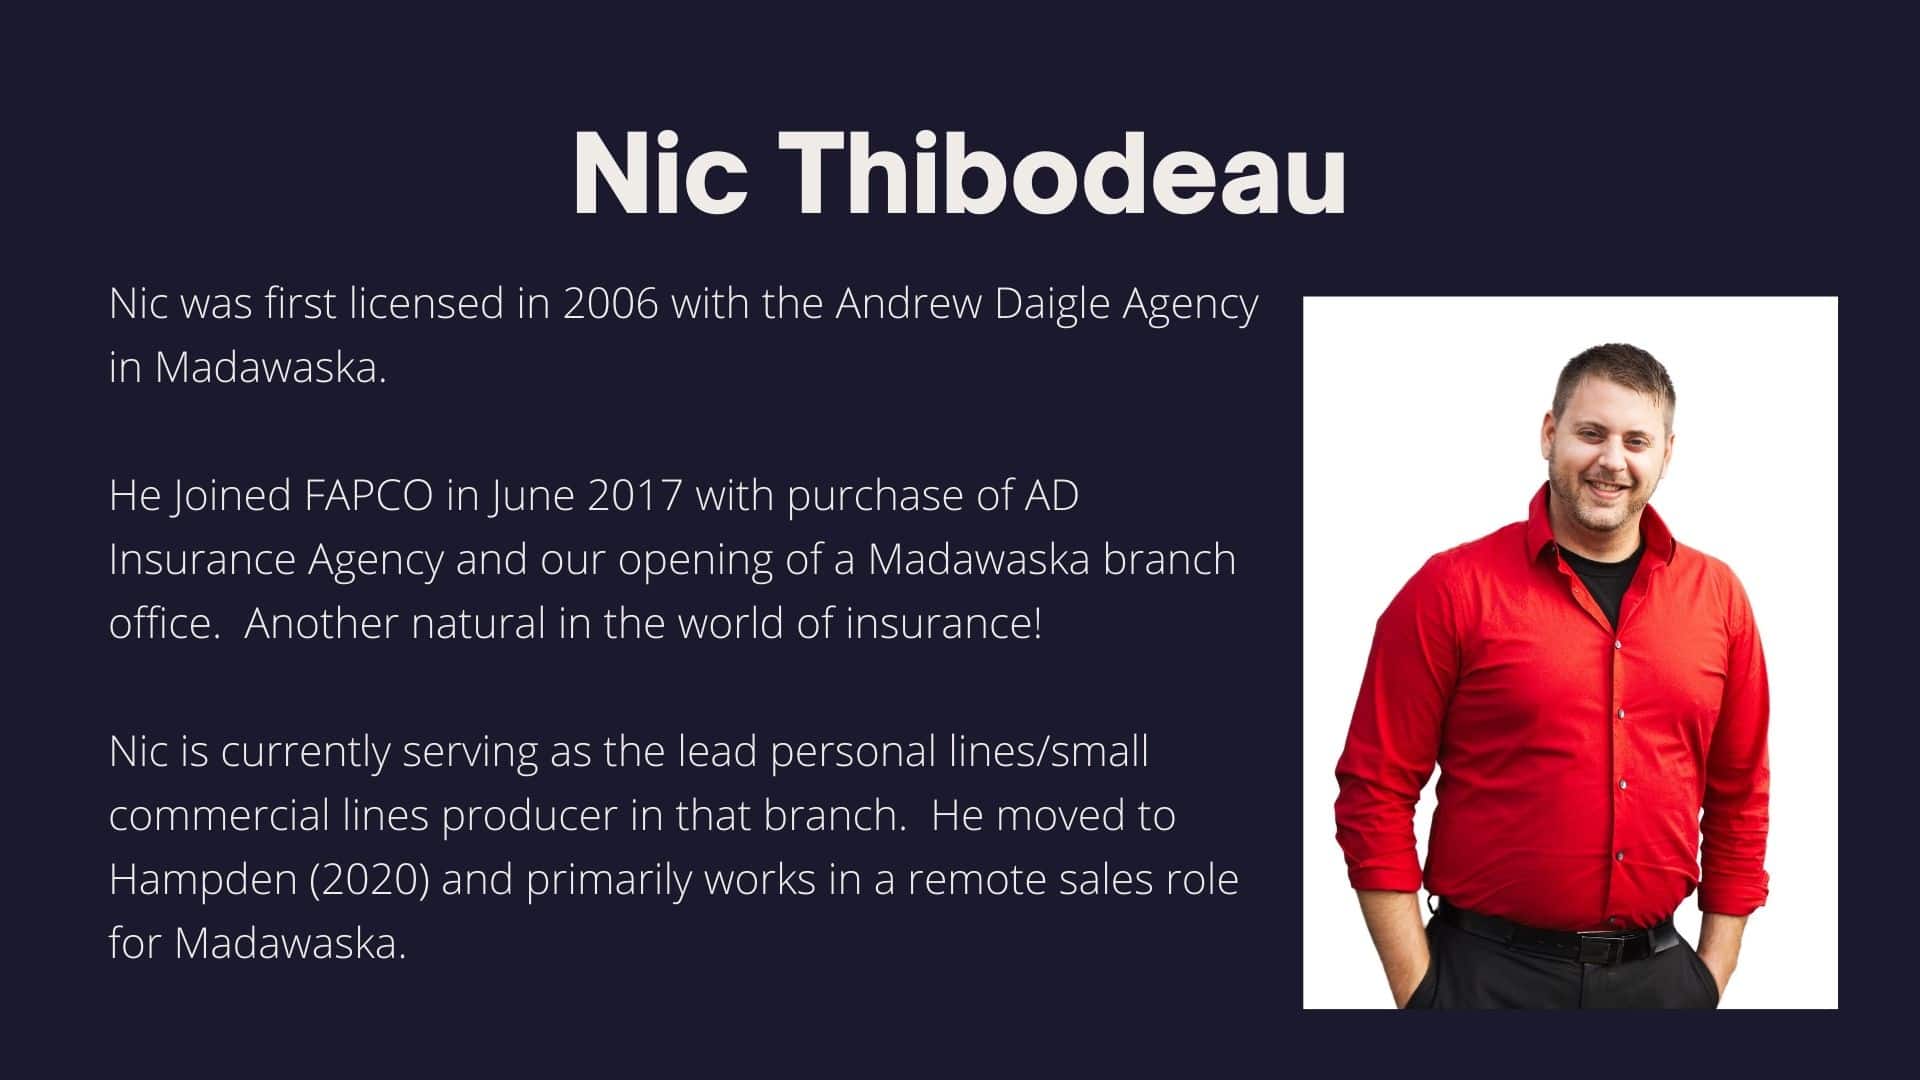 Nic Thibodeau 5 years